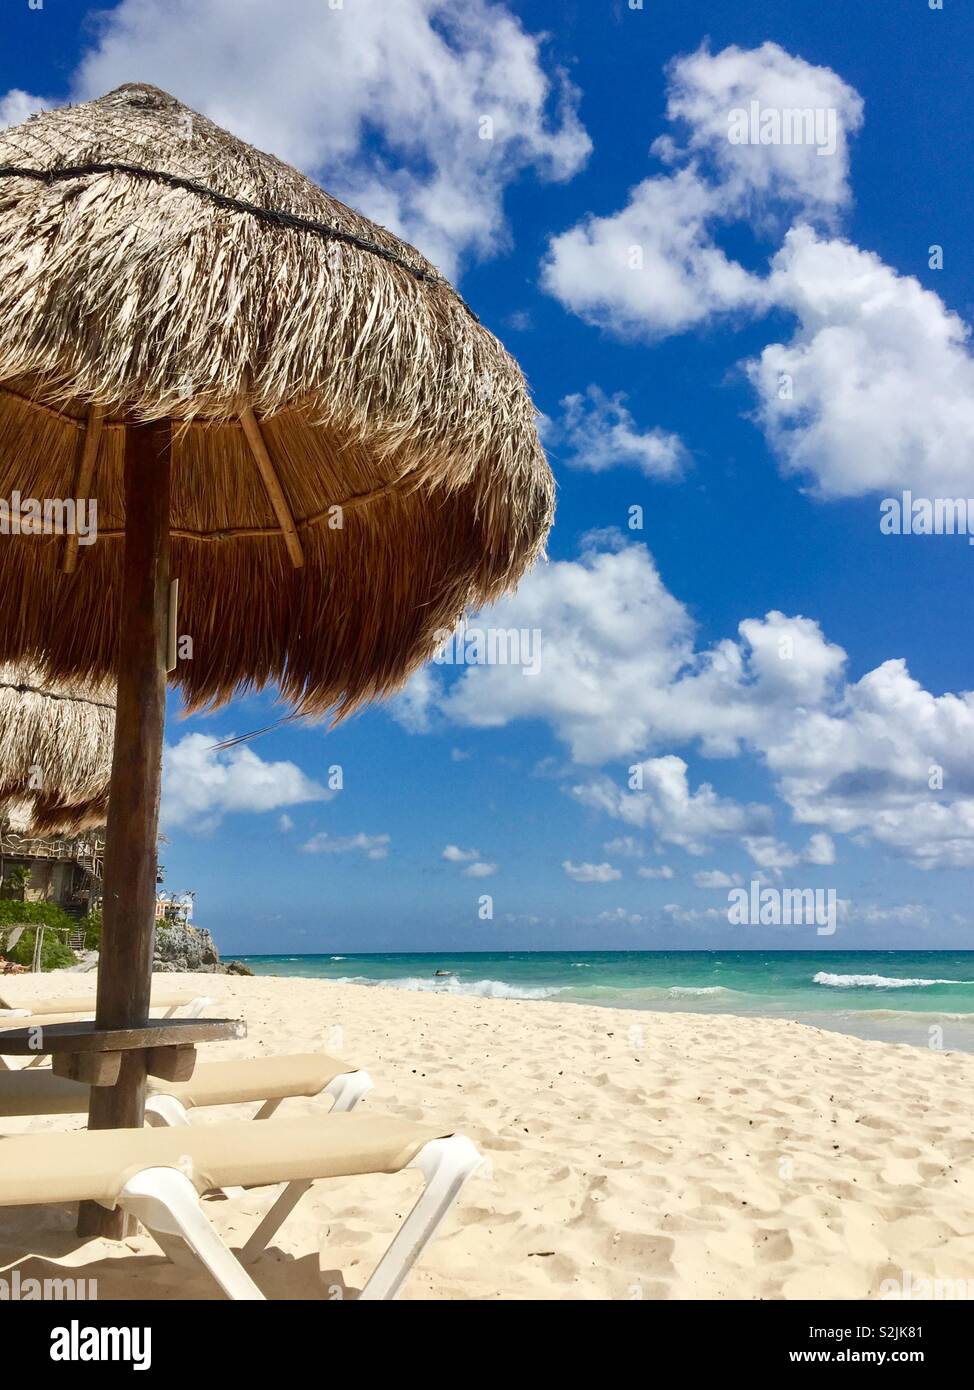 Cabana on the beach, tulum, Mexico Stock Photo